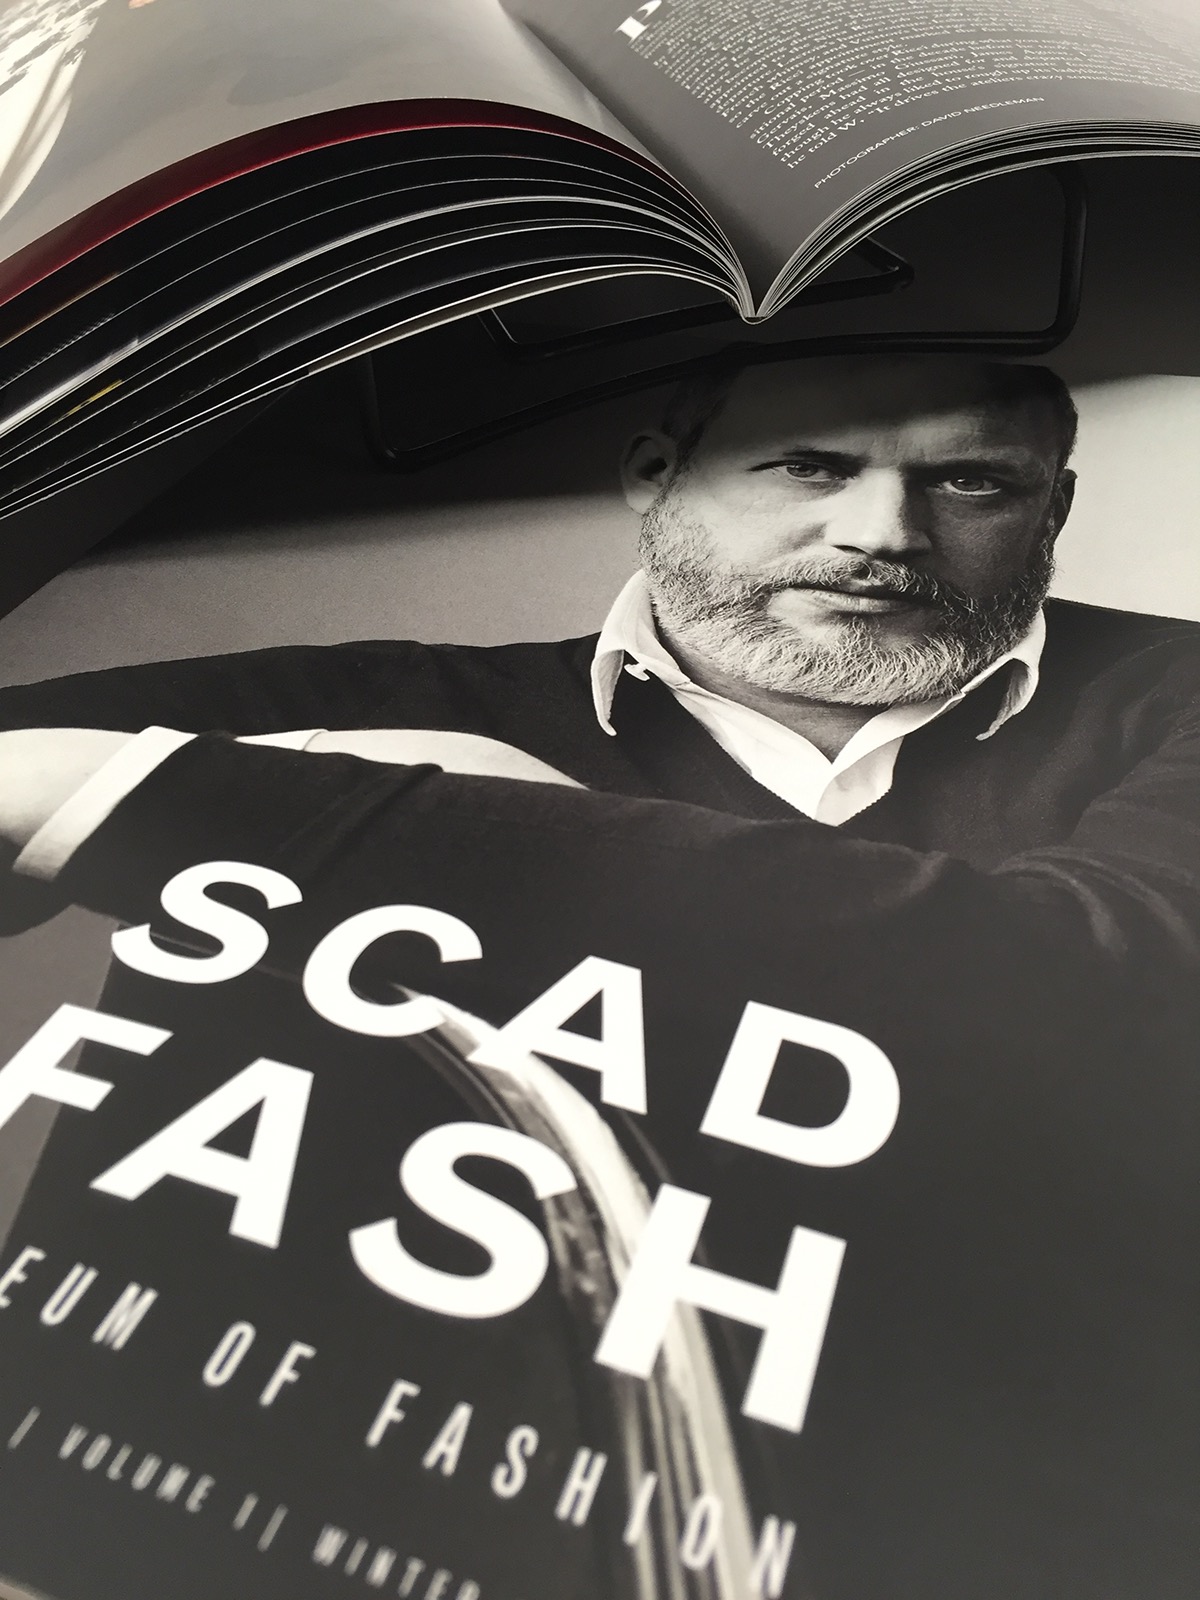 scadfash fashion museum magazine